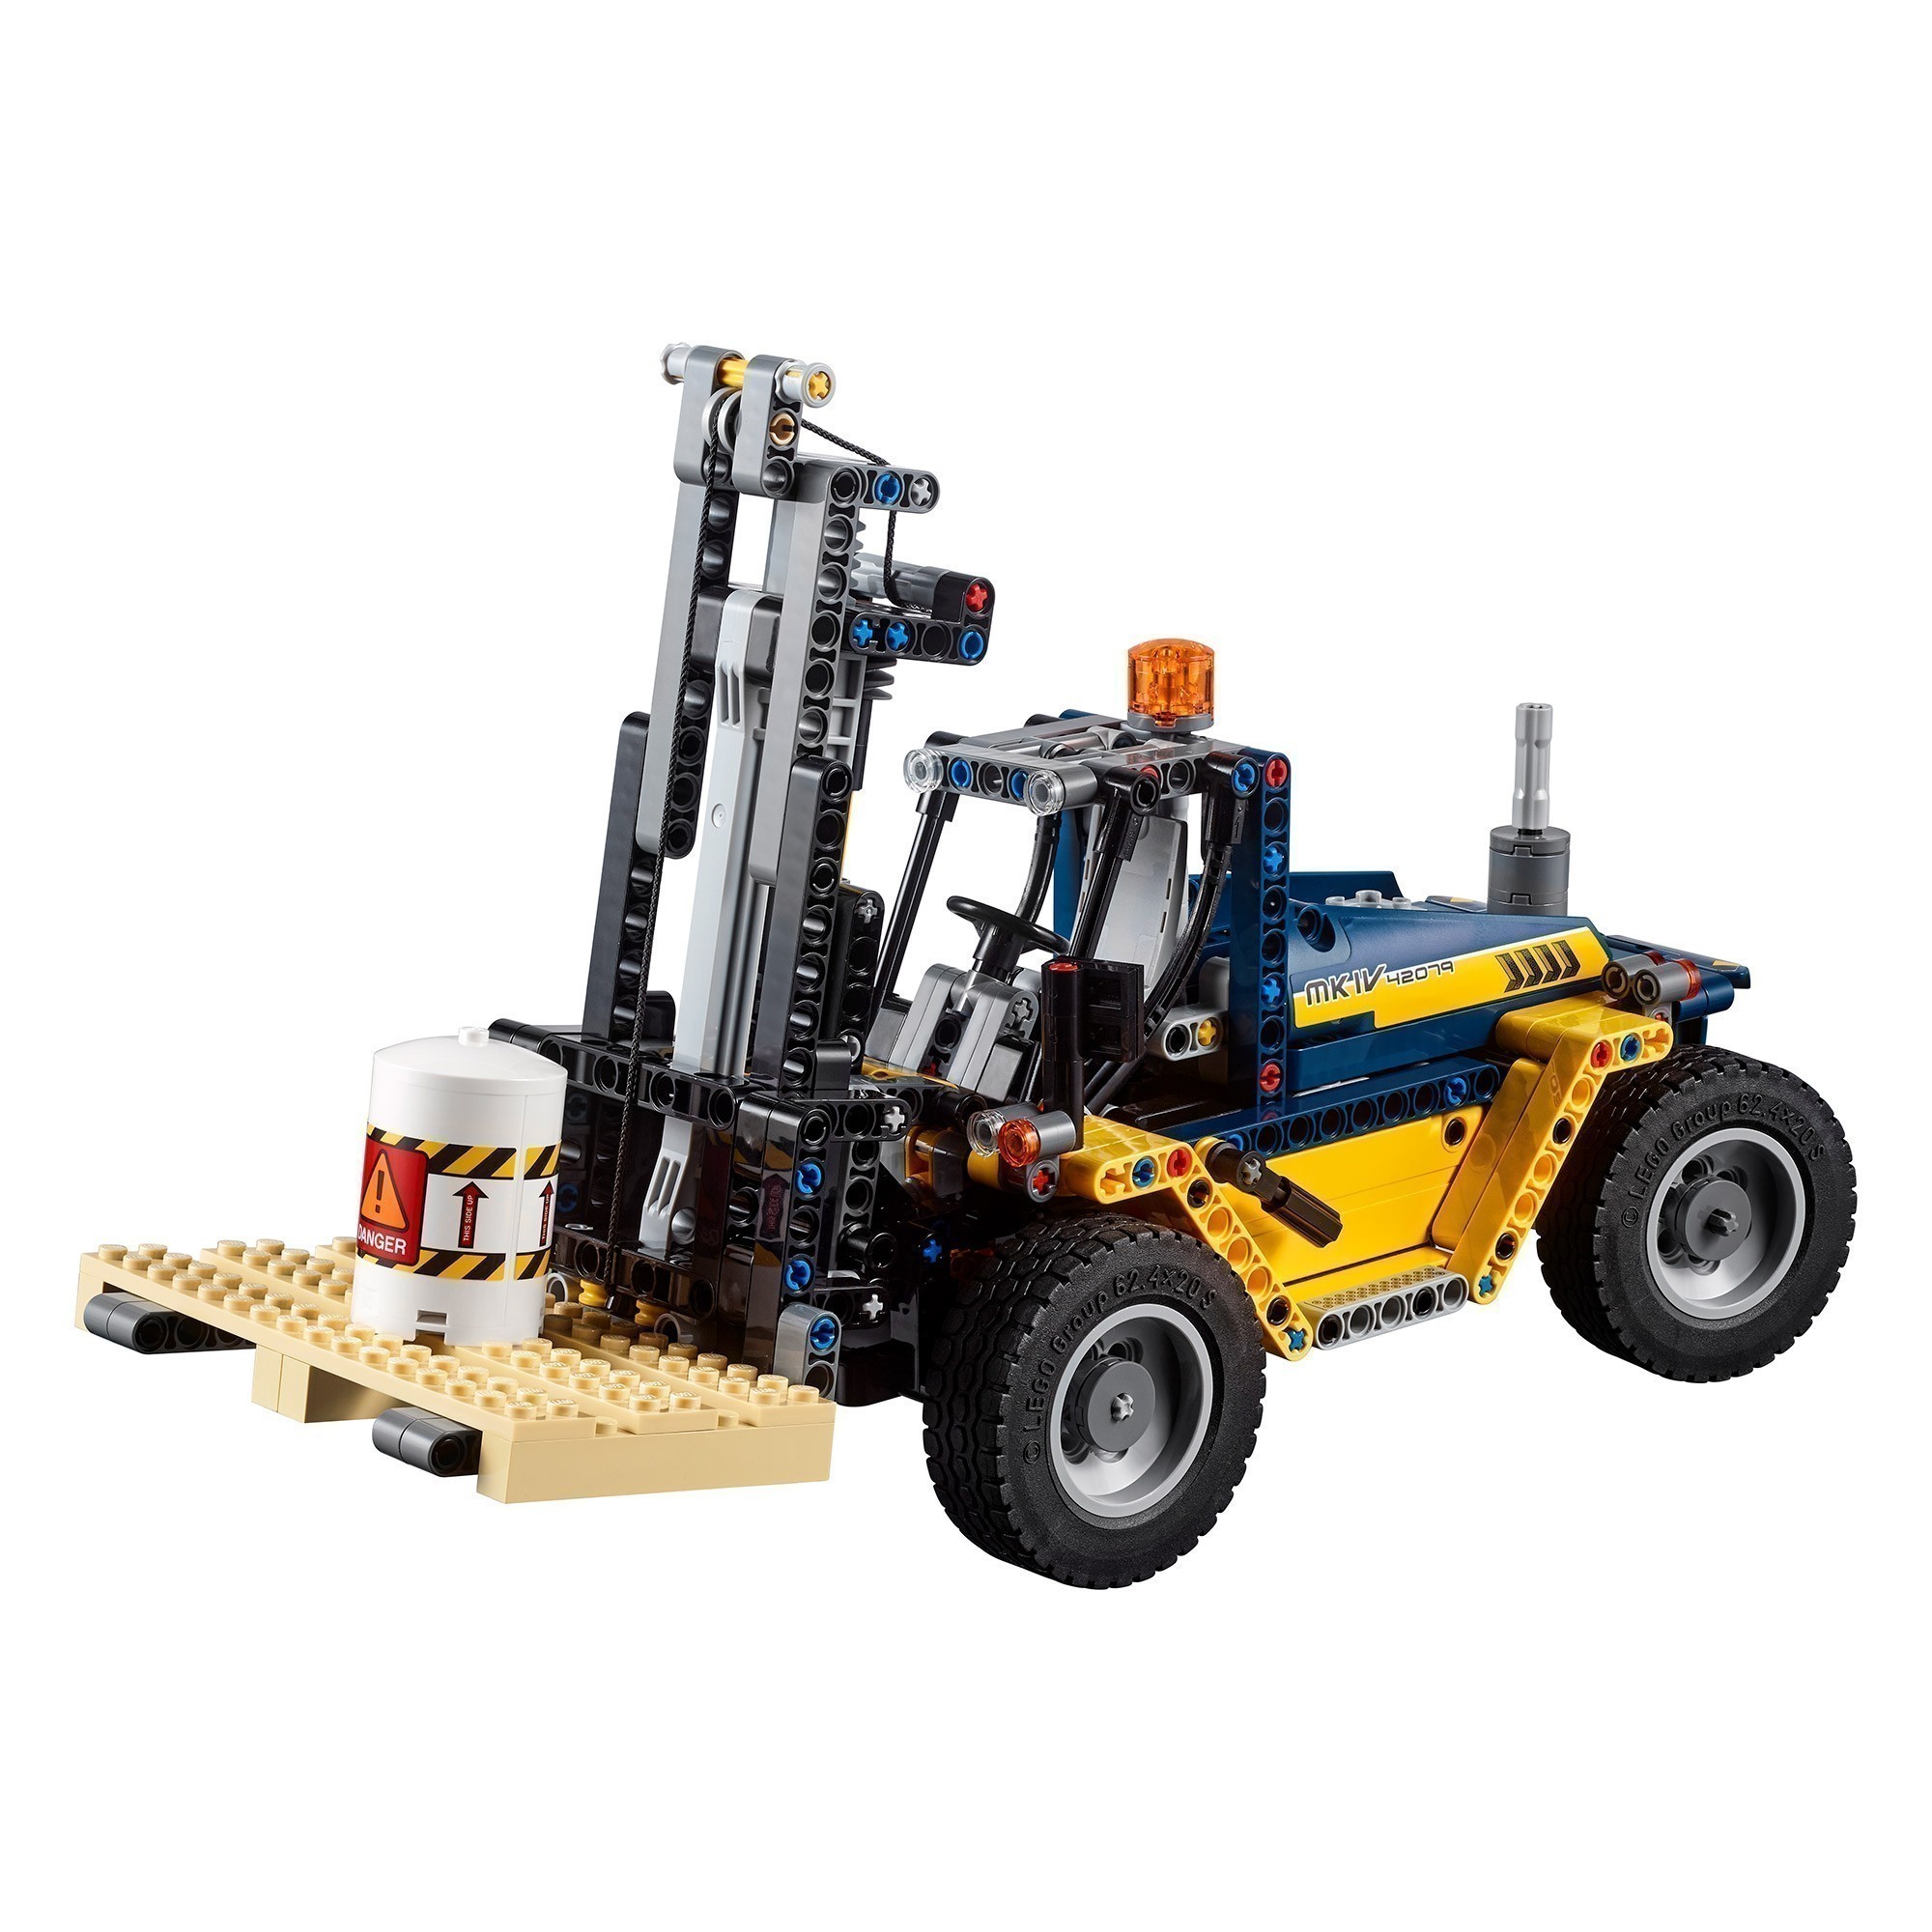 LEGO® Technic 42079 - Heavy Duty Forklift